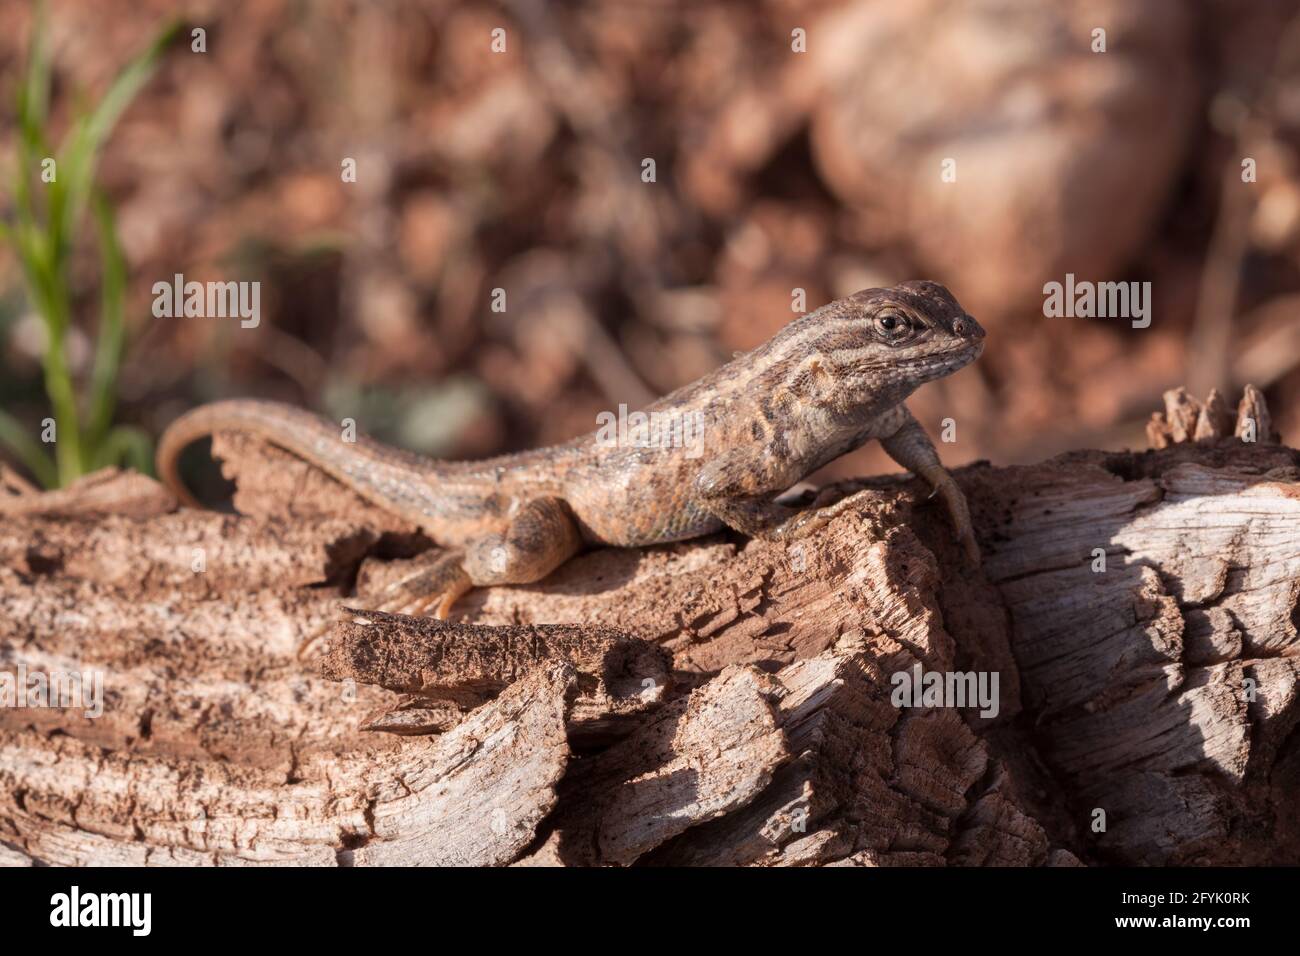 The Northern Sagebrush Lizard, Sceloporus graciosus graciosus, is a subspecies of the Common Sagebrush Lizard. Stock Photo